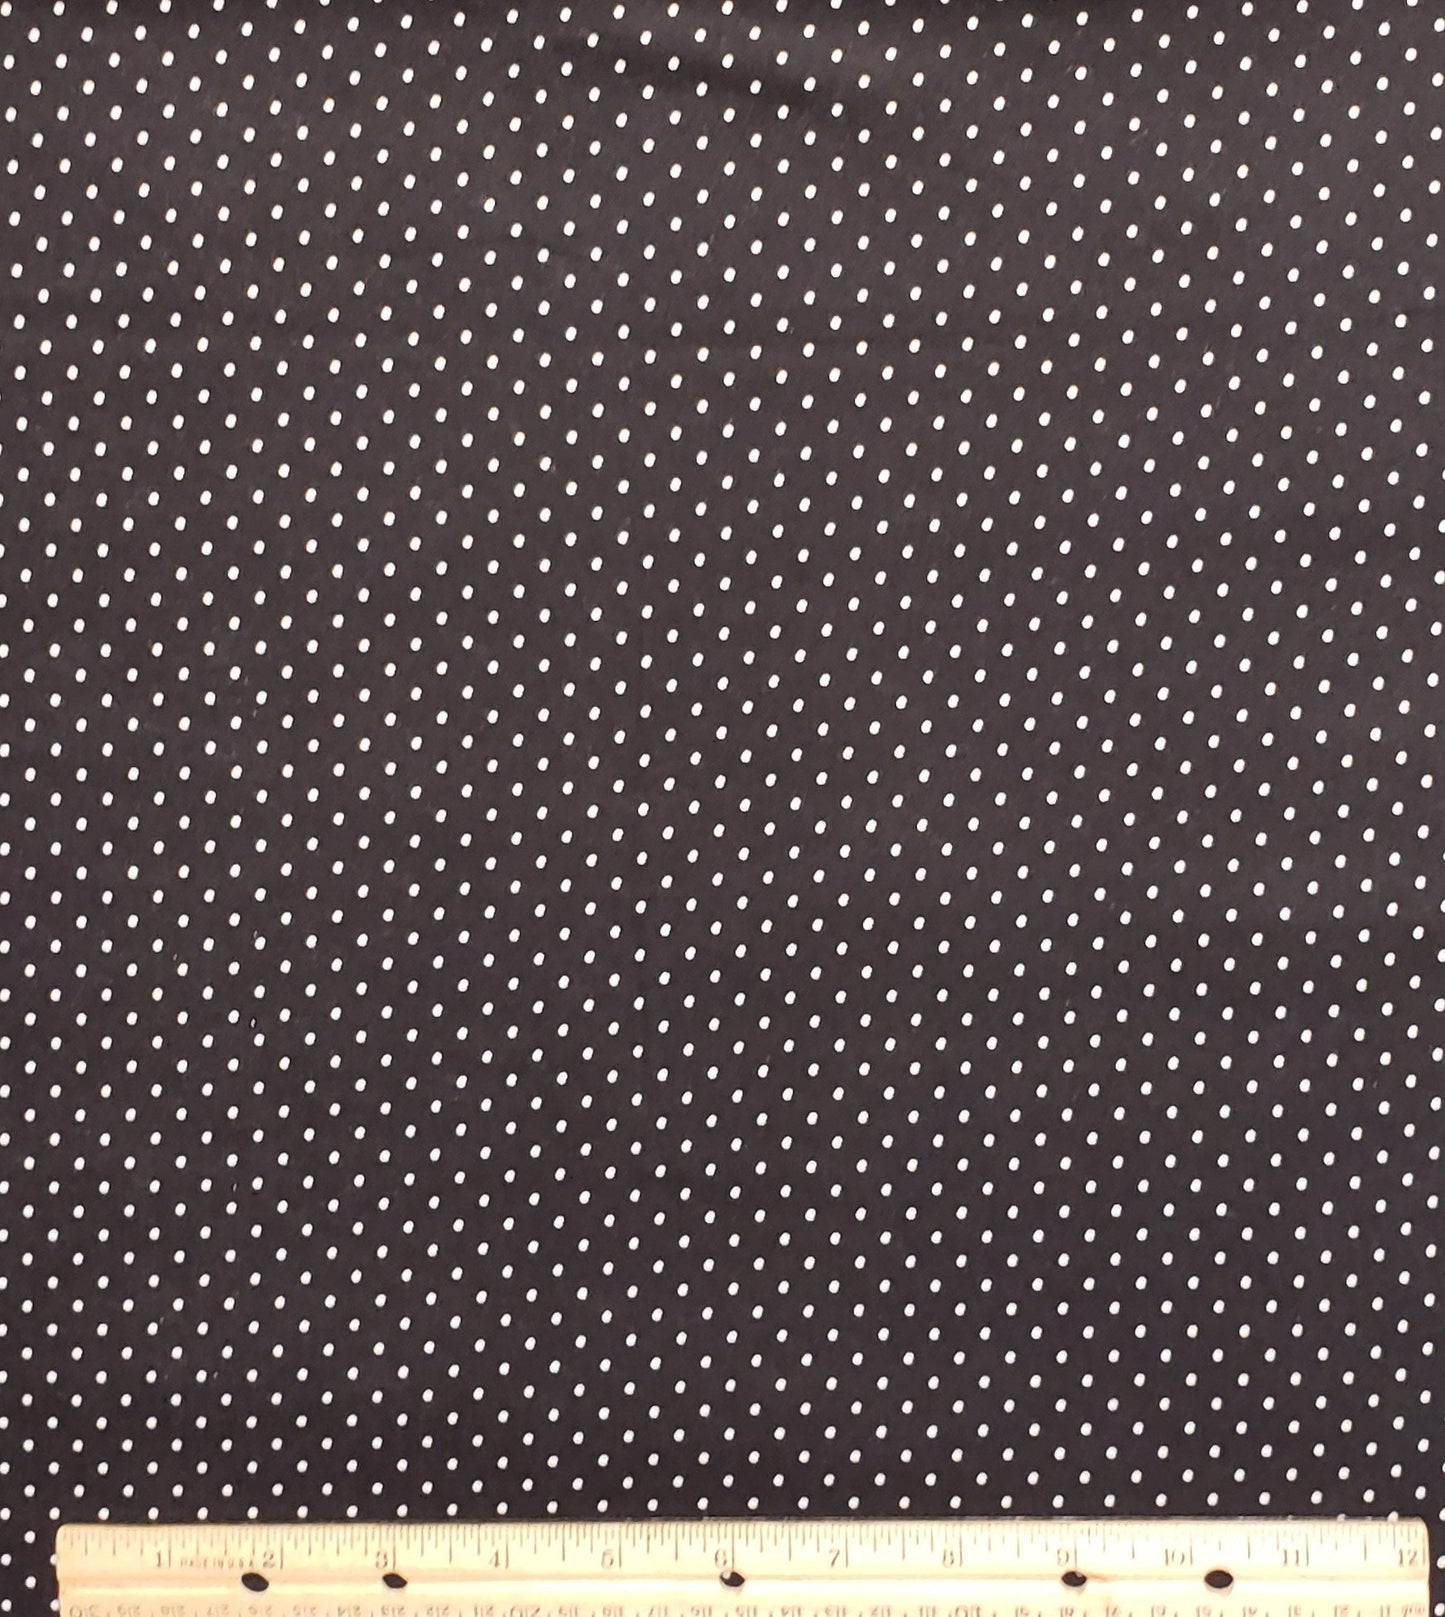 Black Fabric / White Tiny Polka Dot Print - Selvage to Selvage Print